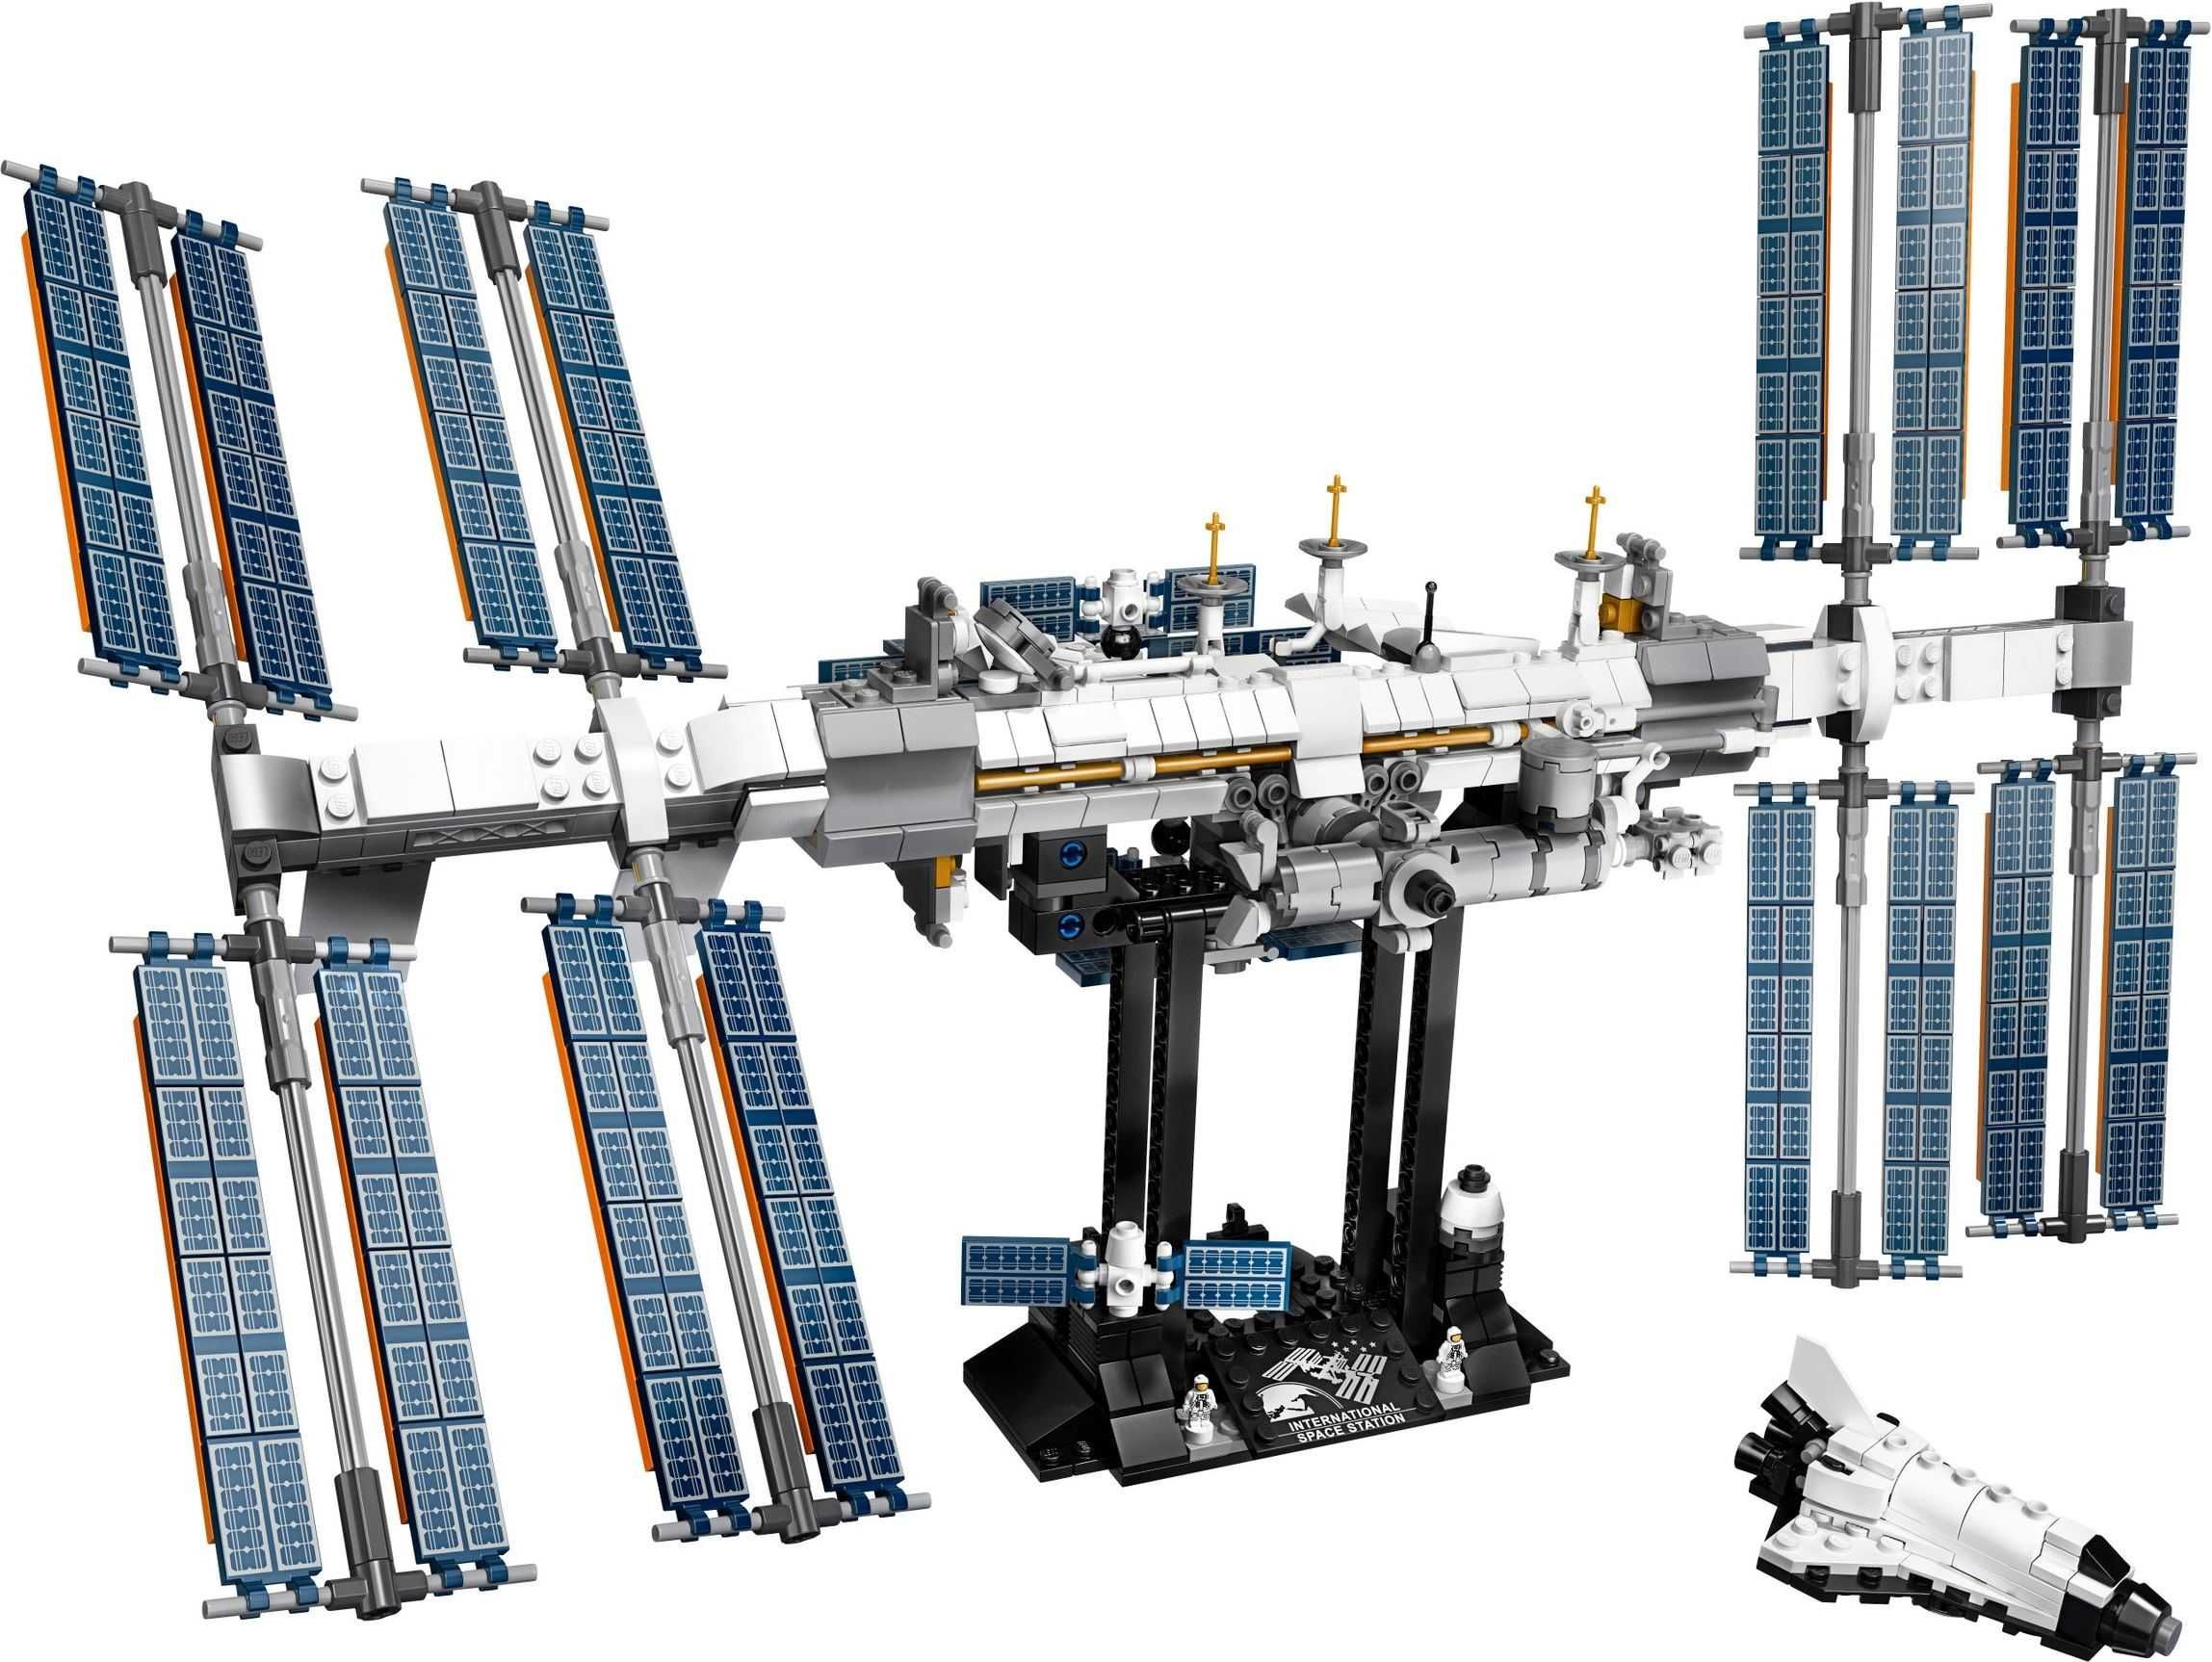 LEGO Ideas NASA- International Space Station 21321, 864p -NOU sigilat